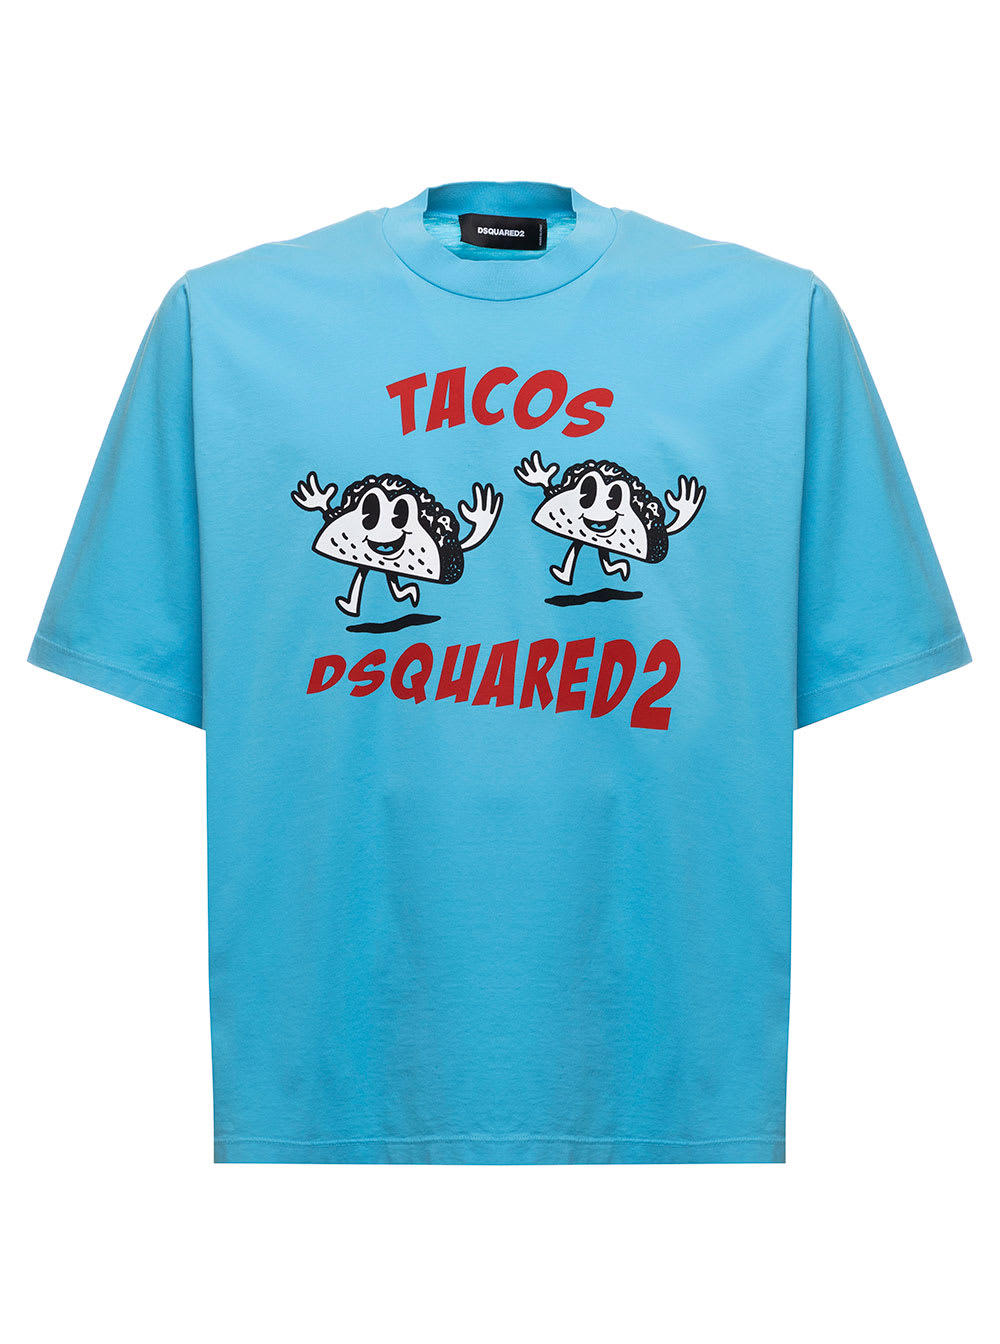 Dsquared2 D-quared2 Mans Light Blue Cotton T-shirt With D2 Tacos F. Ball Logo Print